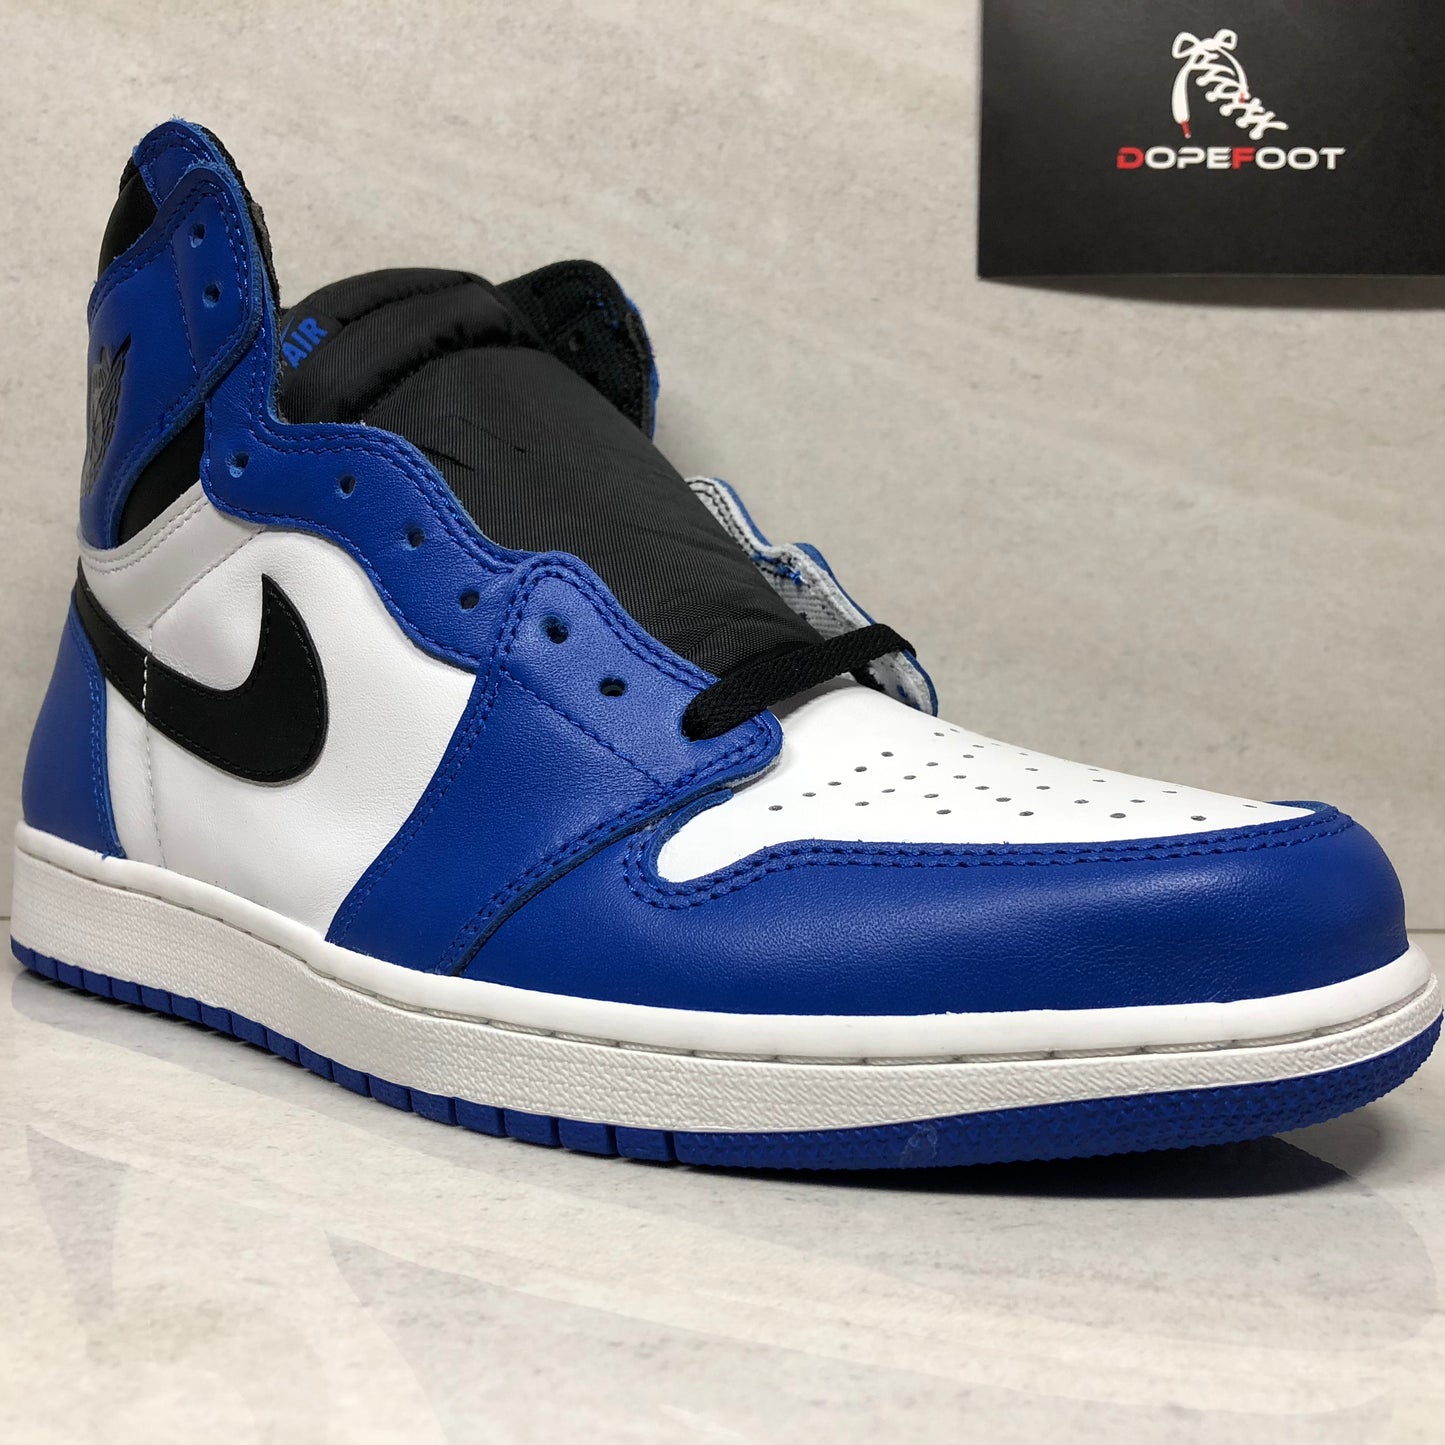 DS Nike Air Jordan 1 I High OG Game Royal Taille 12 Bleu 555088 403